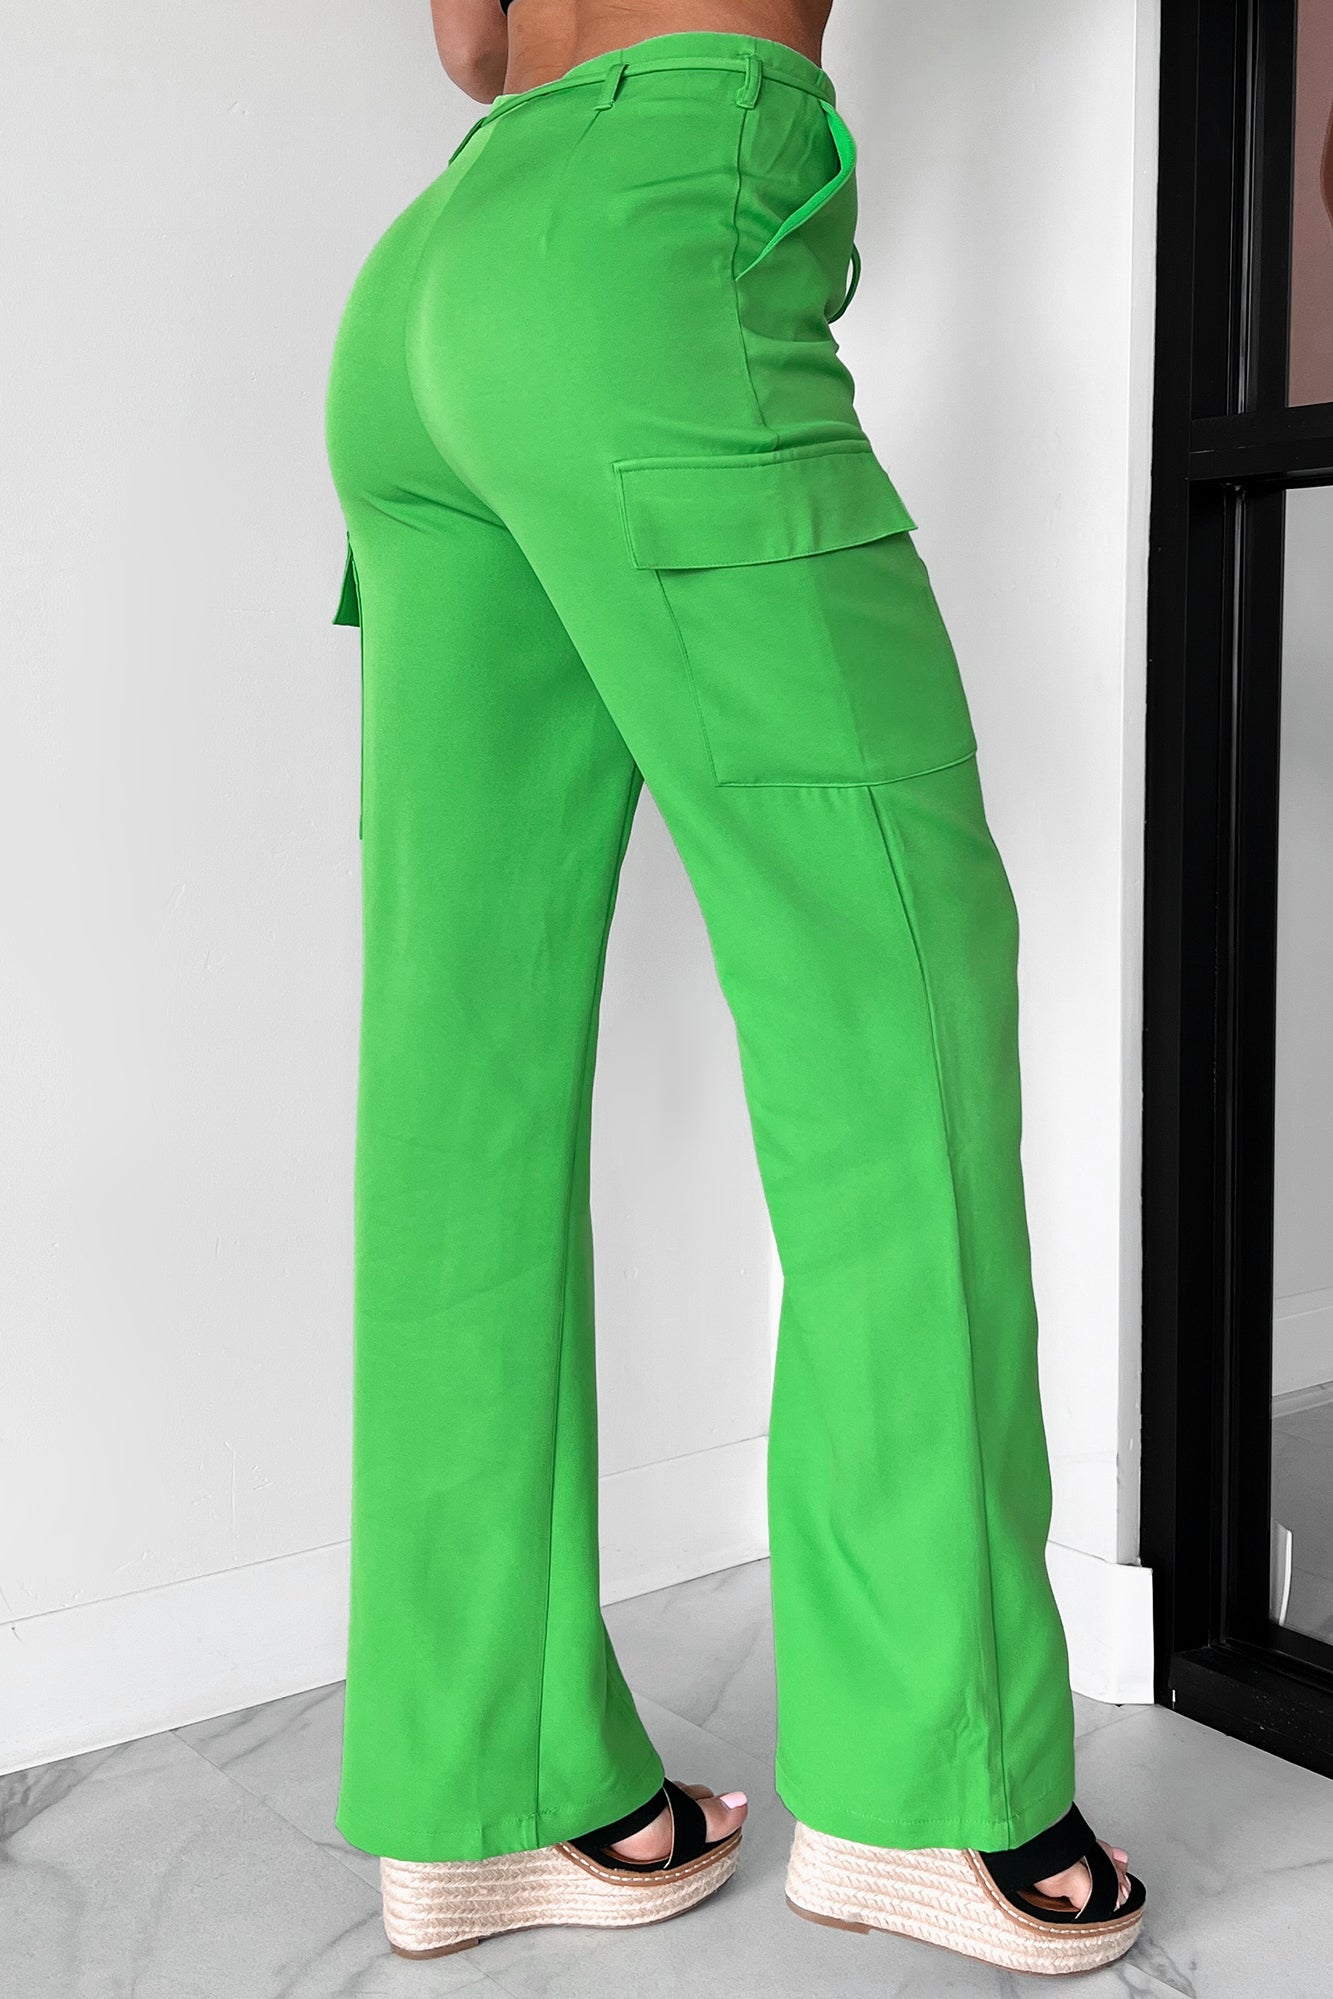 With Stylish Ease High Waist Cargo Pants (Green) - NanaMacs